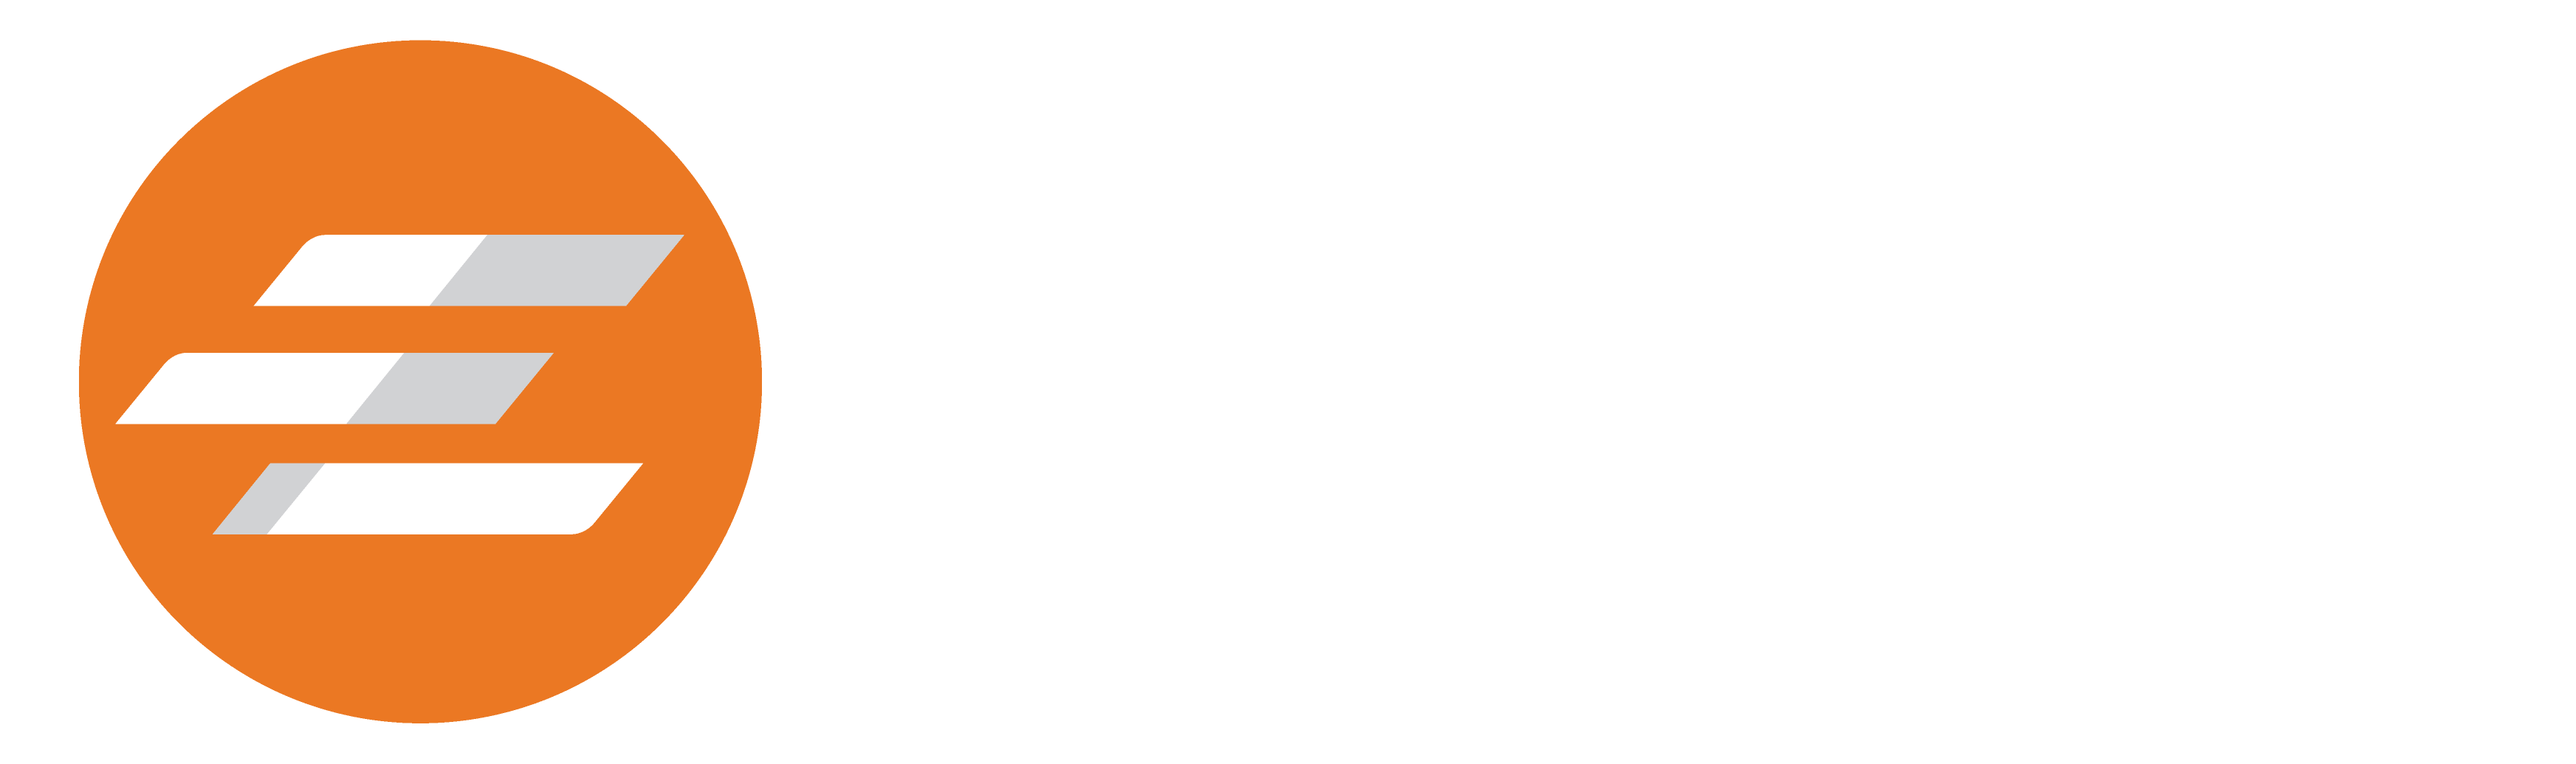 Atomfab Logo